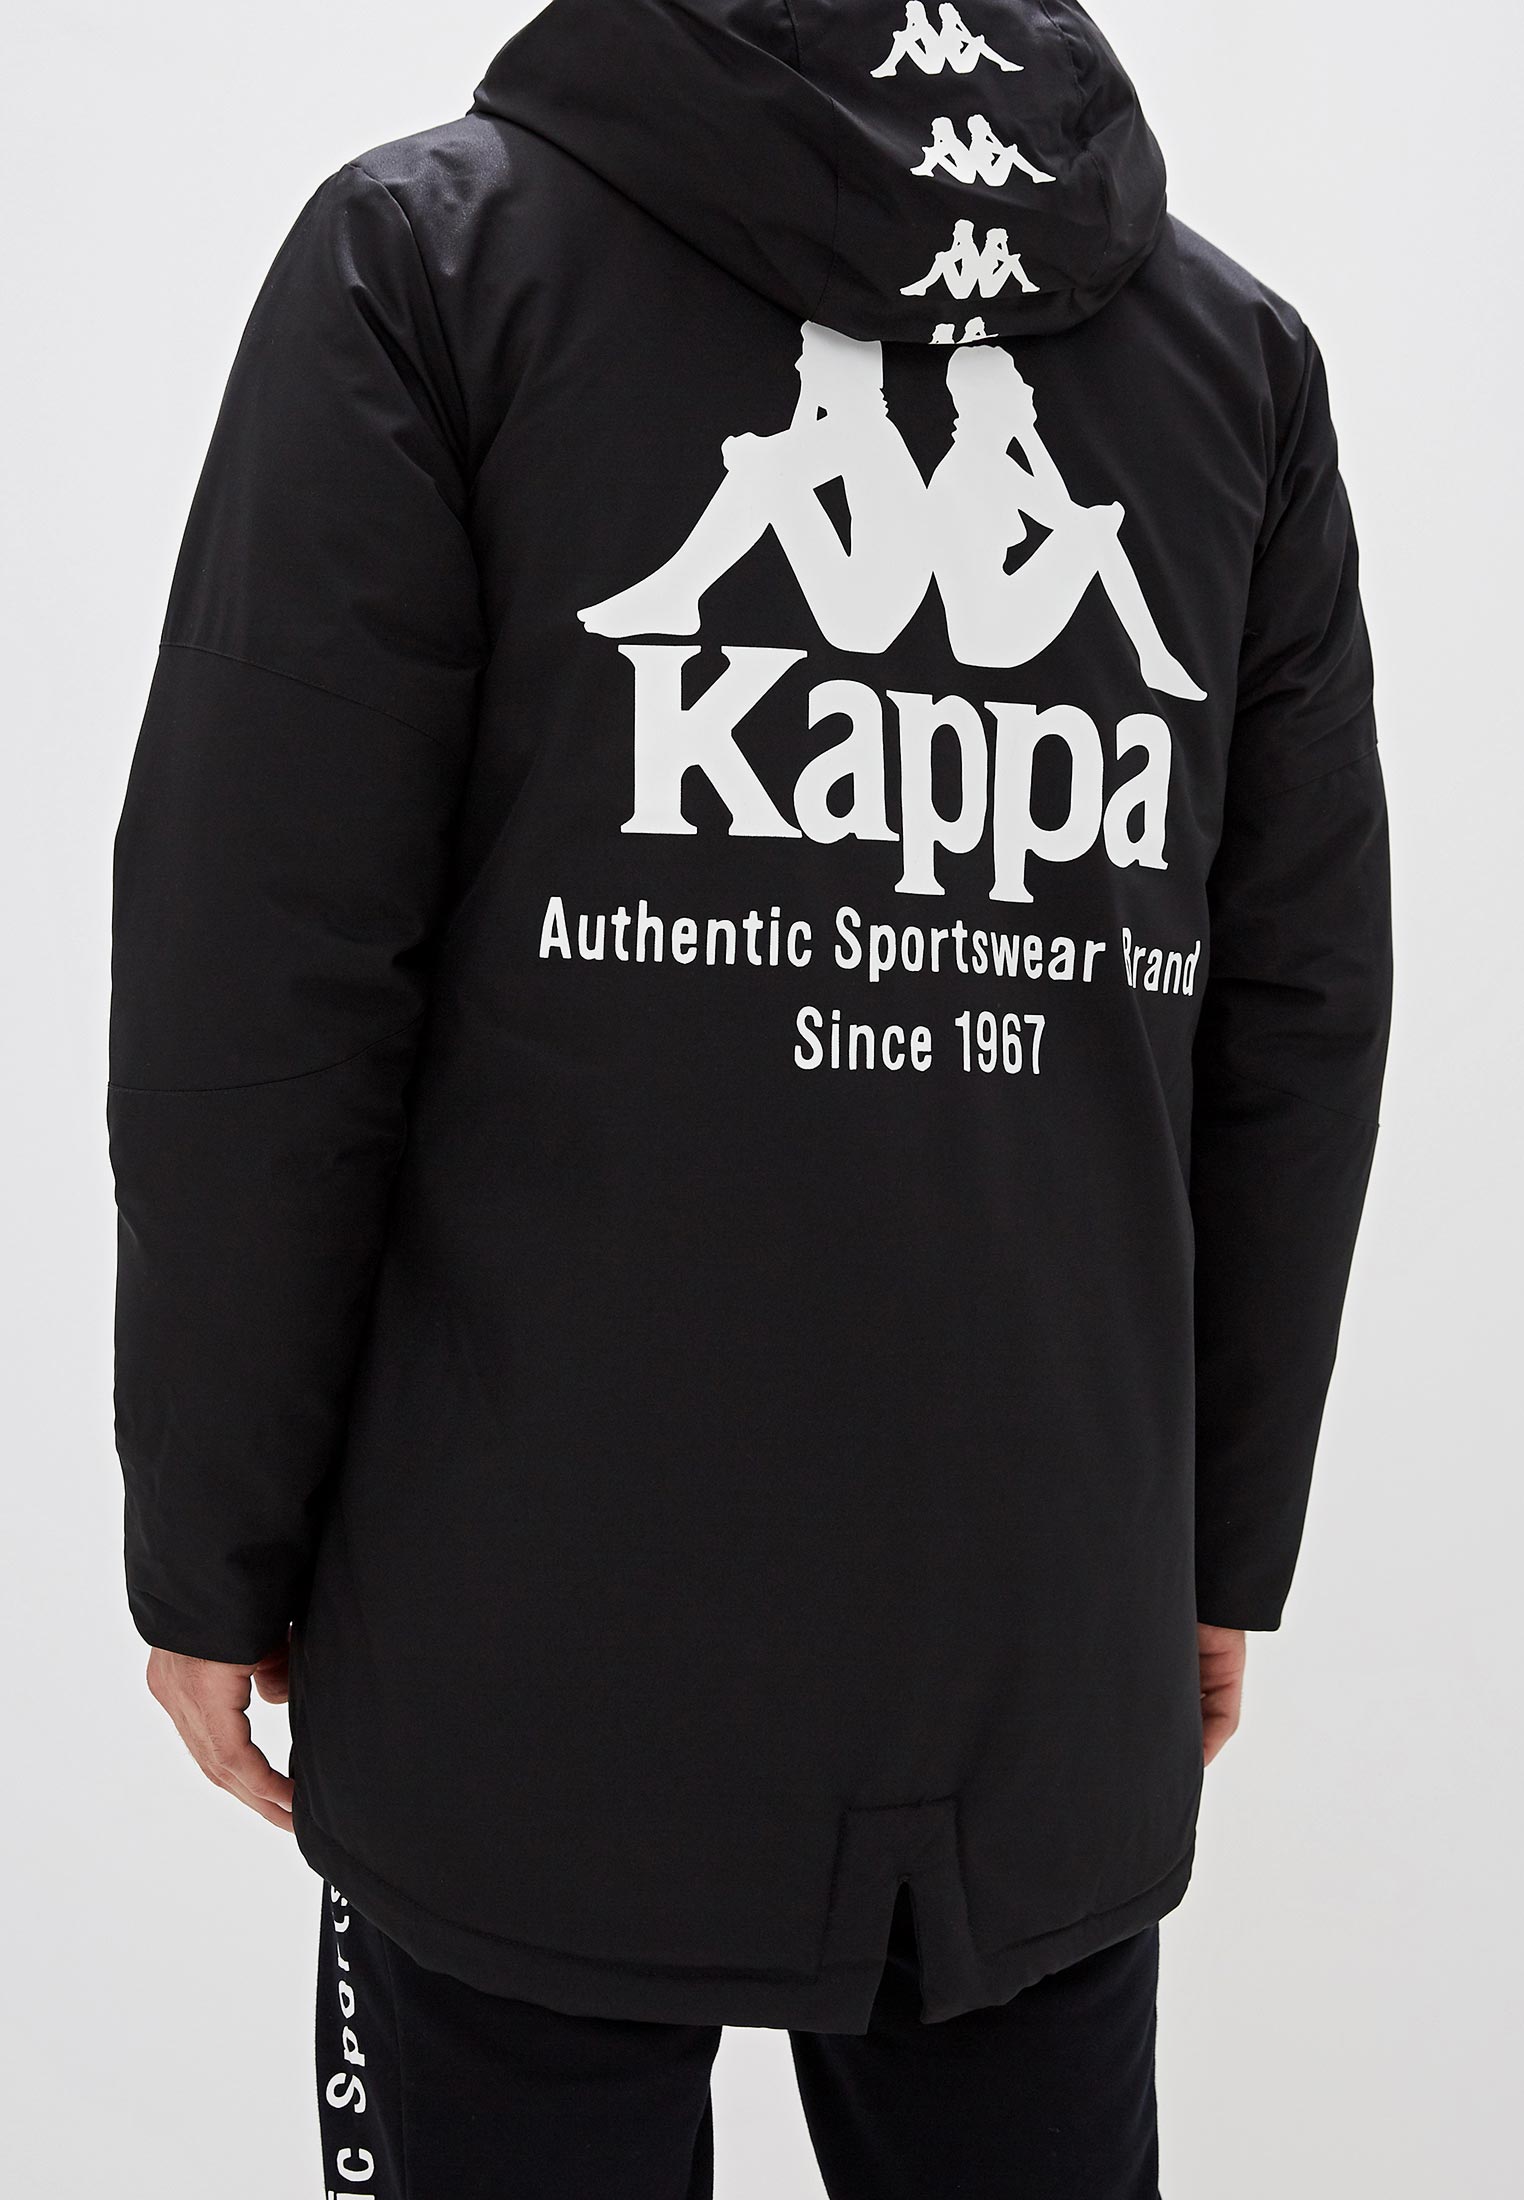 Куртка карра. Парка Kappa мужская. Куртка Kappa мужская зимняя. Kappa 14871 куртка зимняя.